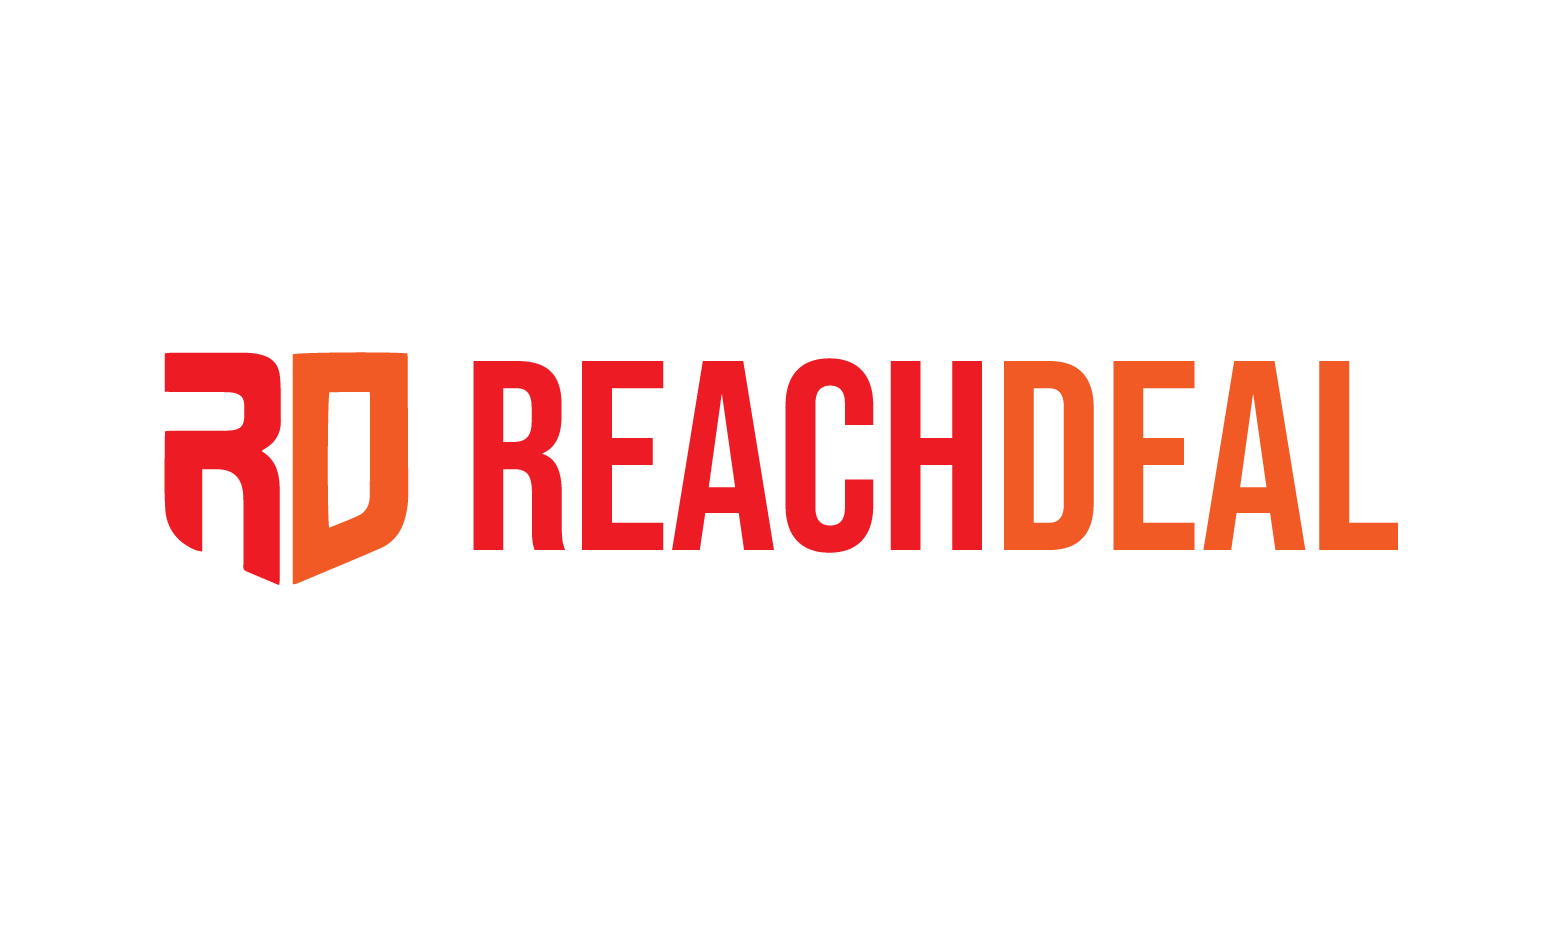 ReachDeal.com - Creative brandable domain for sale